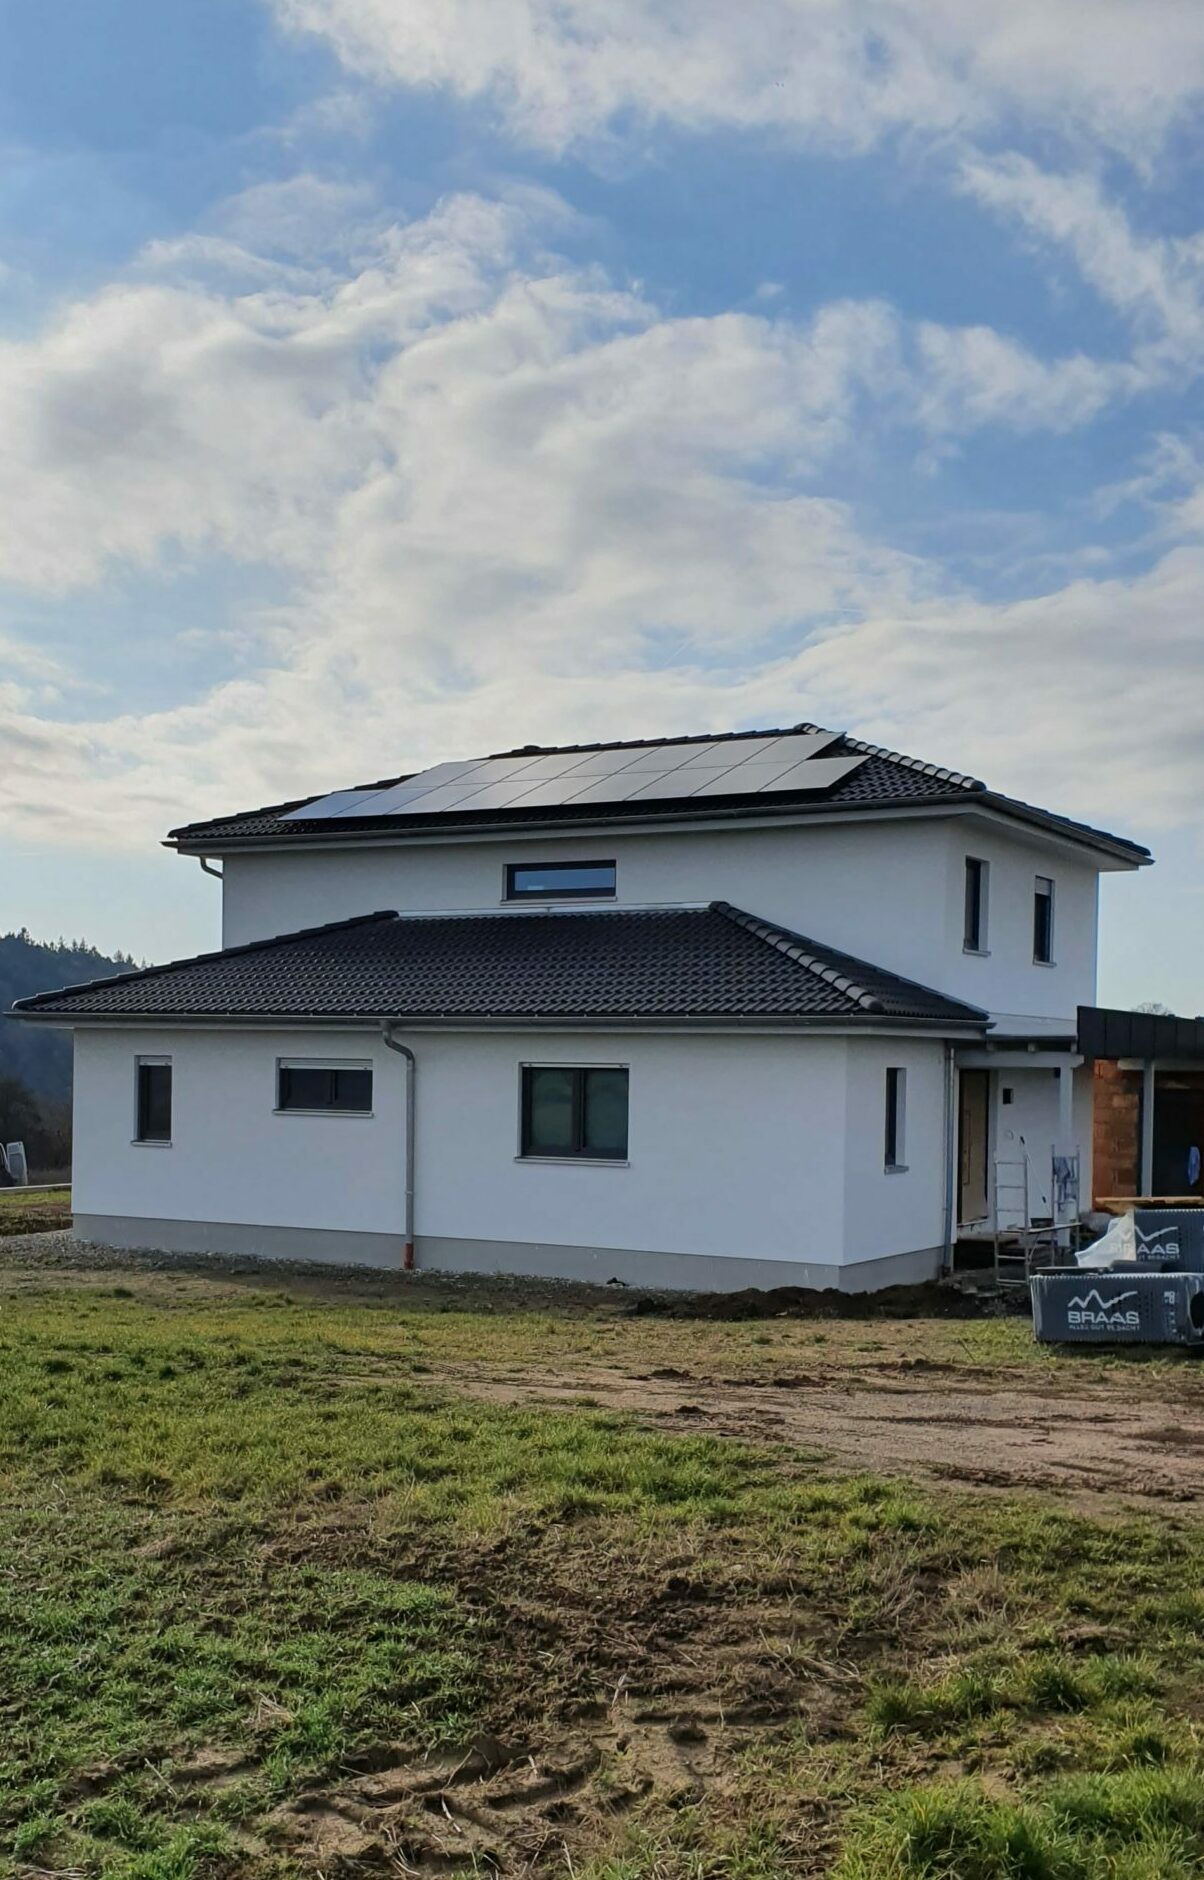 You are currently viewing Einfamilienhaus, Neubau, 9,9 kWp Photovoltaikanlage, Selbstverbrauch mit Tesla (13,5 kWh) Speicher